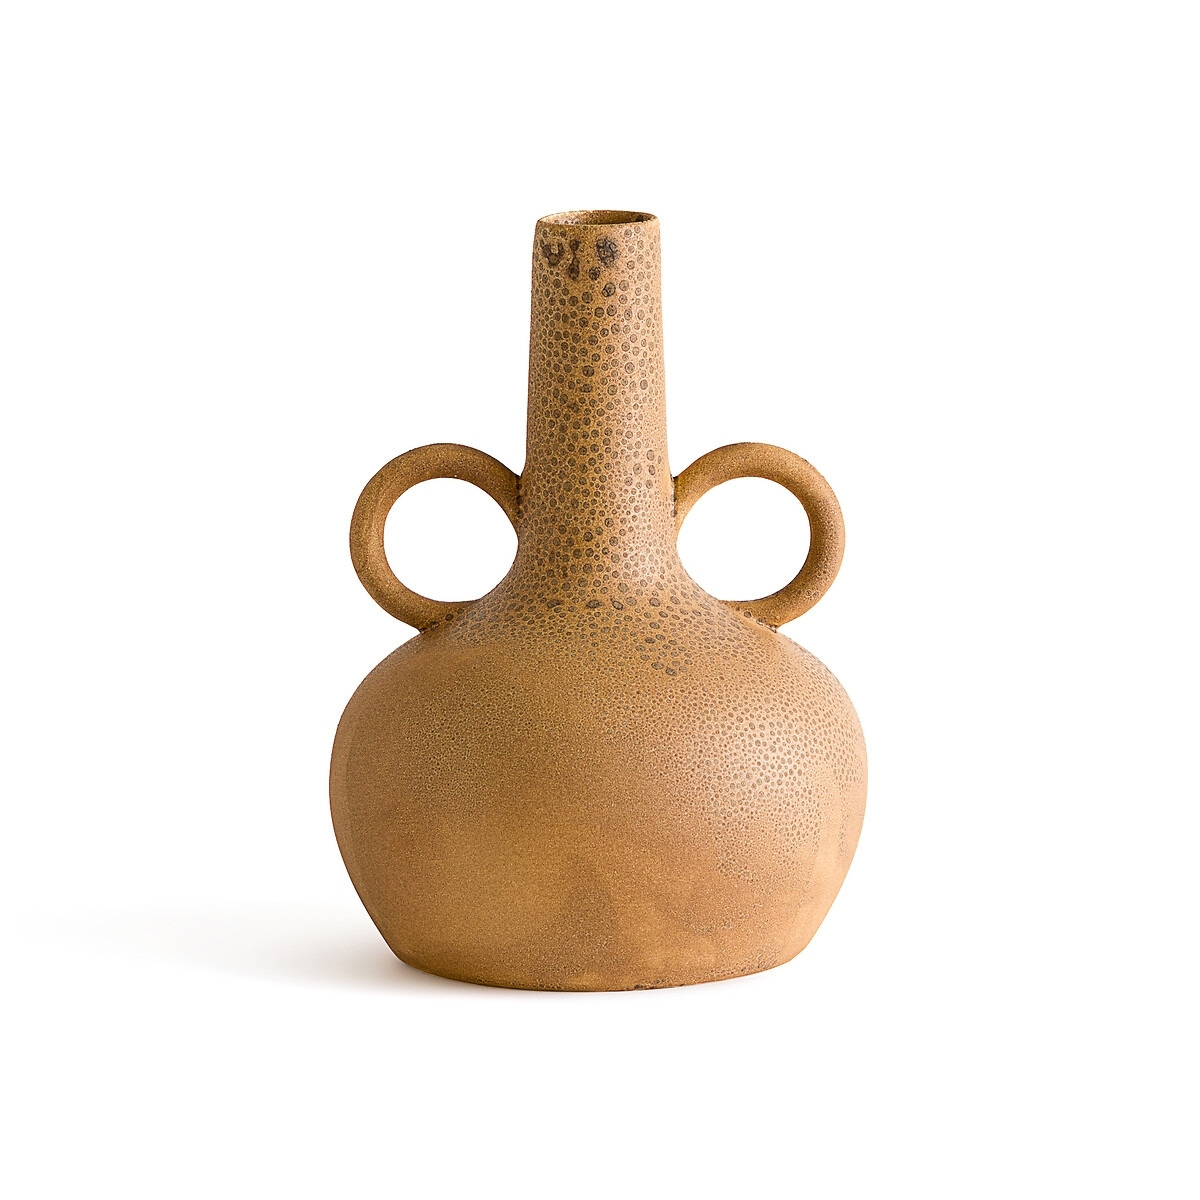 Kuza 29cm High Decorative Ceramic Vase - image 1